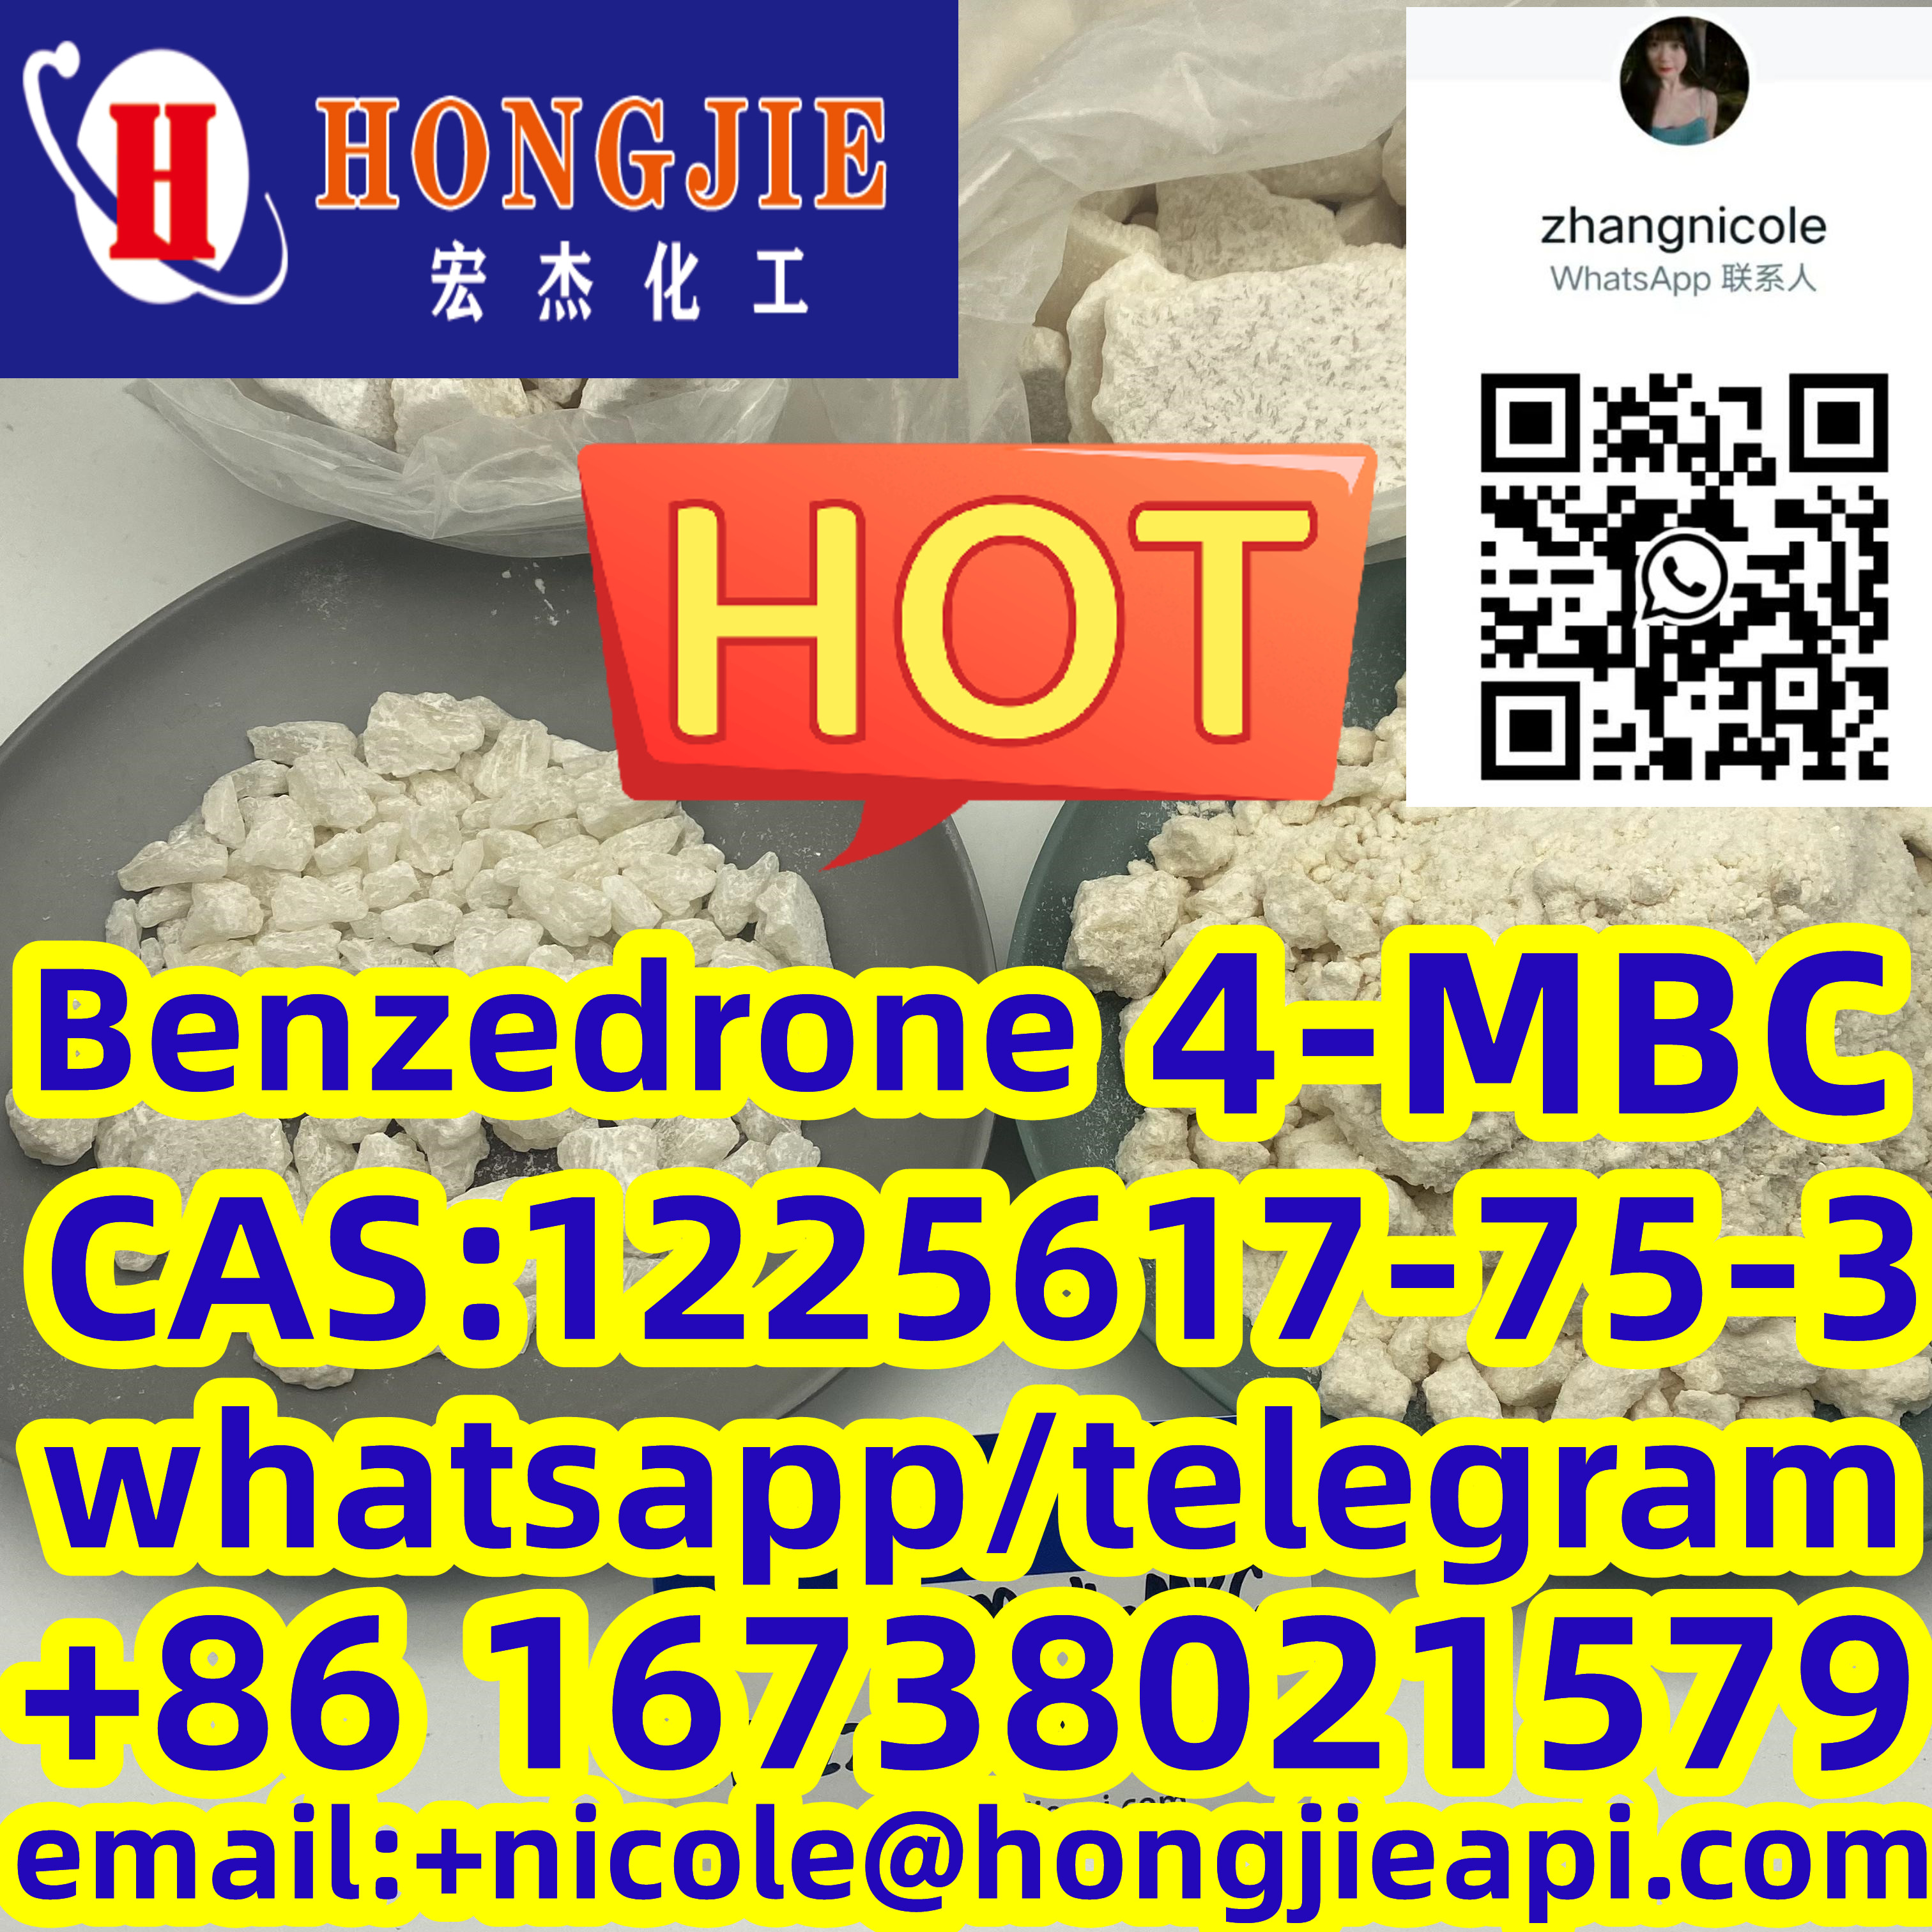 High quality 4-MBC Benzedrone  CAS:1225617-75-3